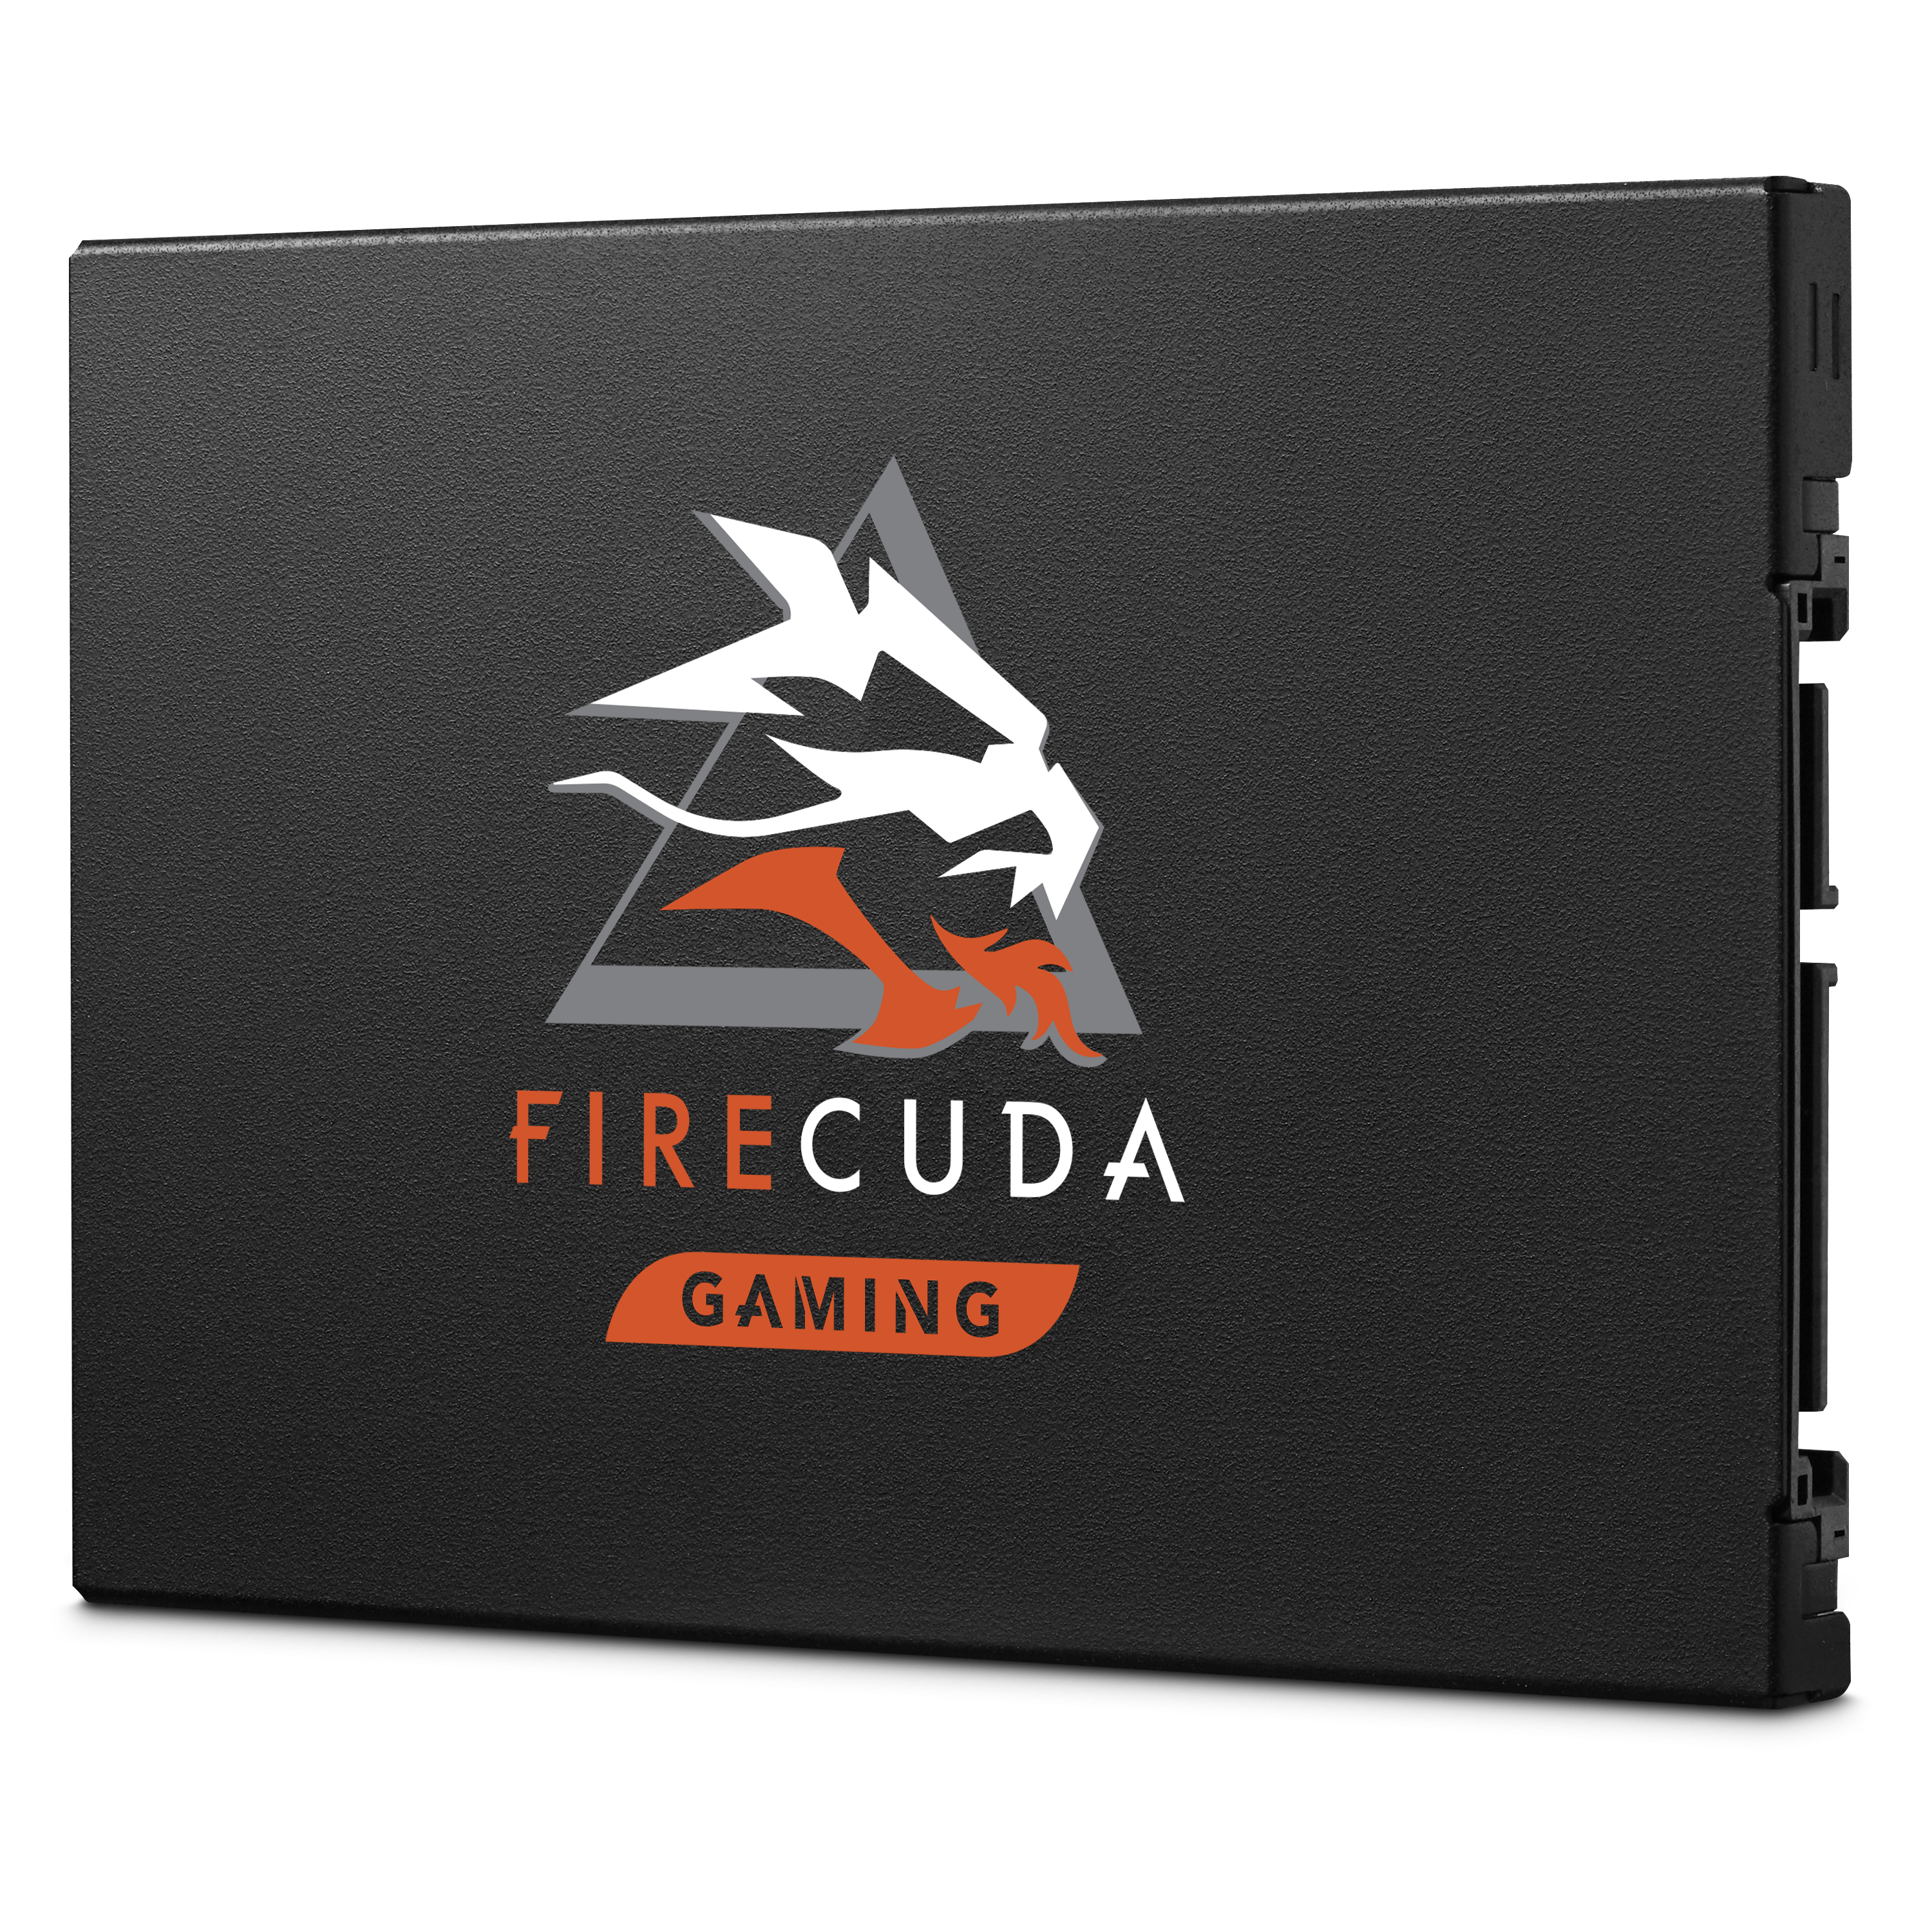 120 6 2 extern SSD Gbps, Zoll, FireCuda 2,5 SATA TB Festplatte Retail, SEAGATE